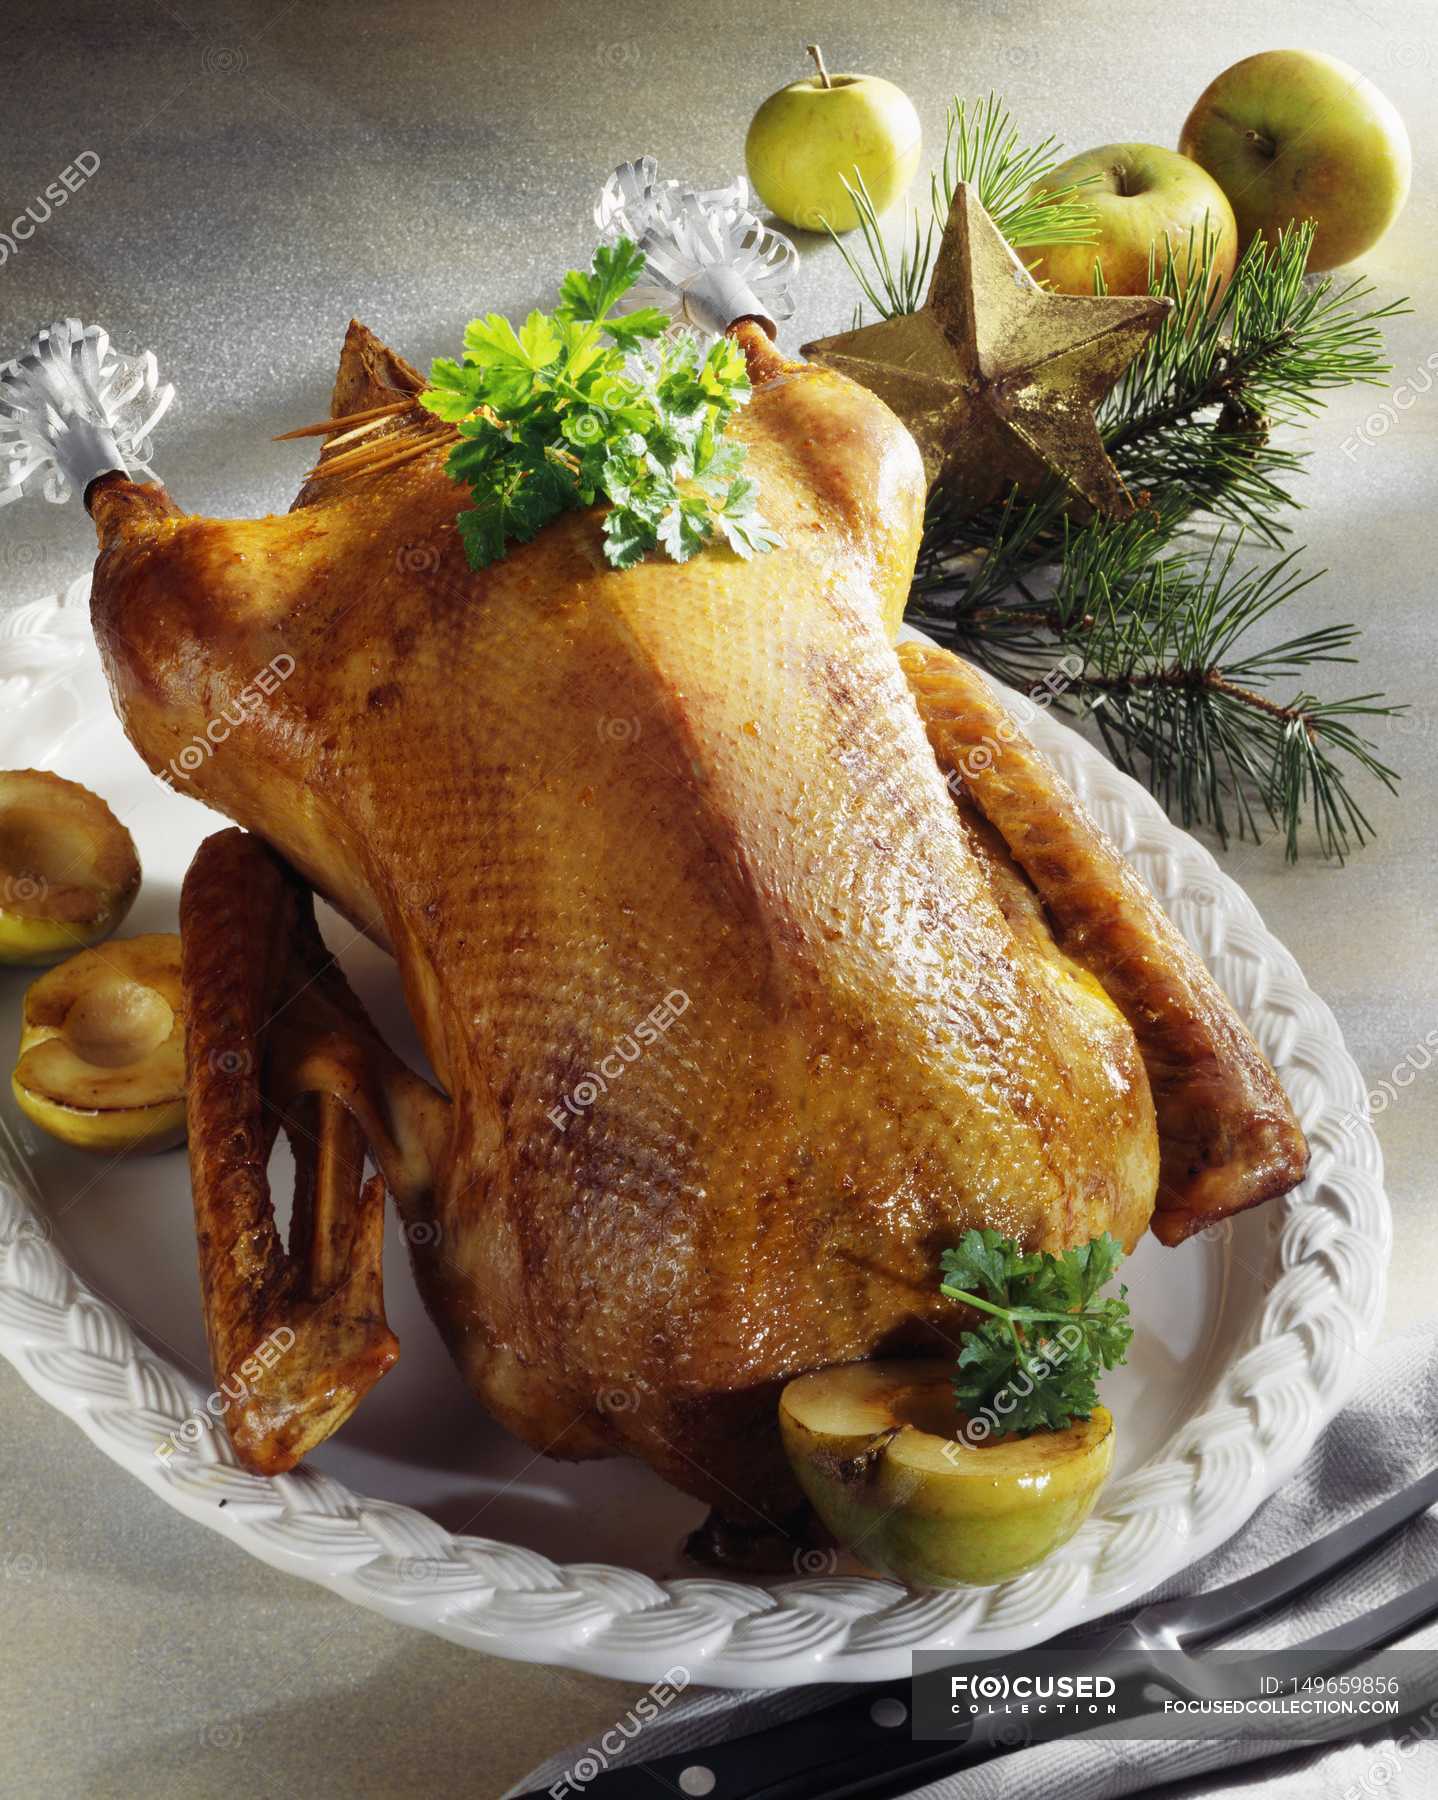 Roast goose with stuffing — goose roast, recipe - Stock Photo | #149659856